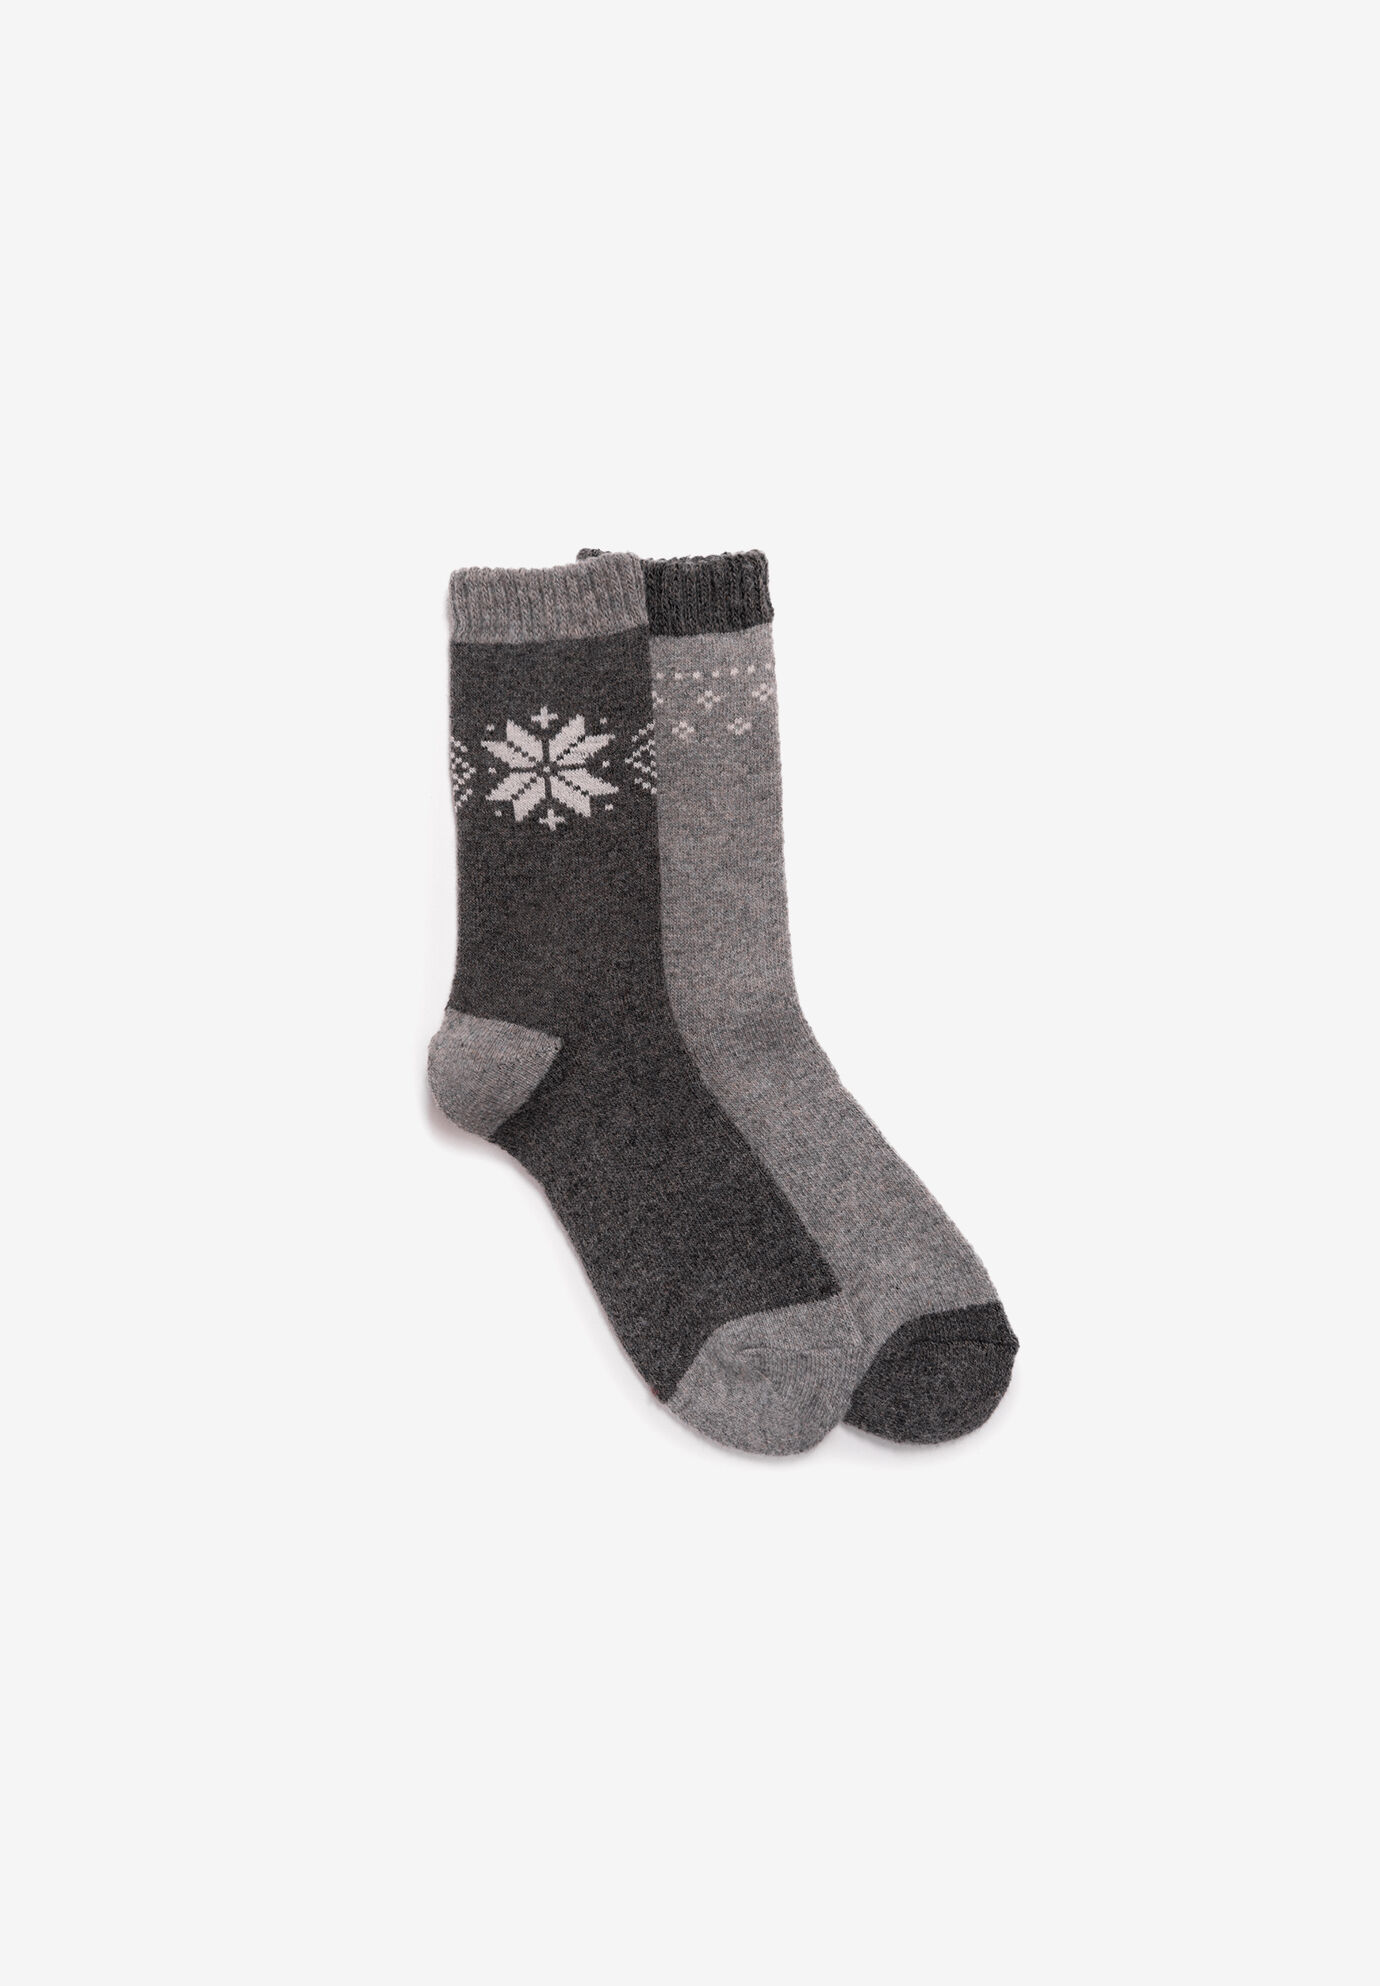 Women's 2 Pair Pack Wool Boot Socks by MUK LUKS in Dark Grey Ash (Size ONE)